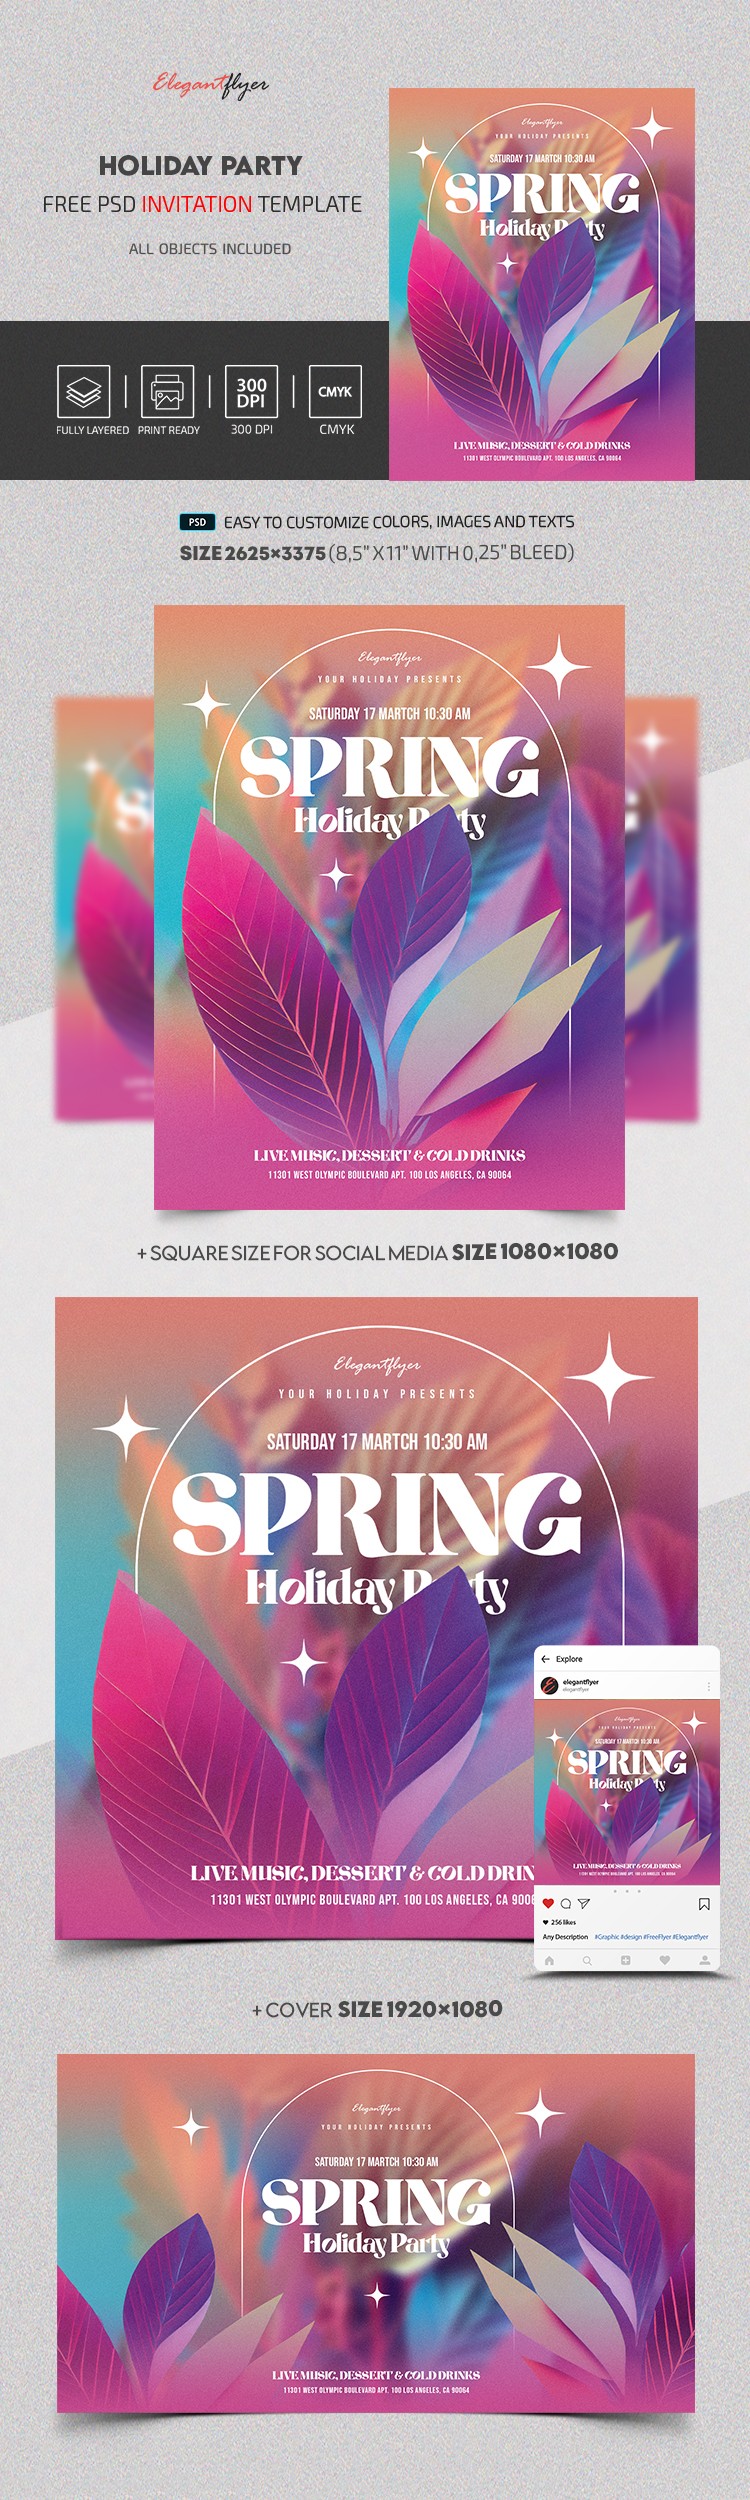 Spring Holiday Party by ElegantFlyer